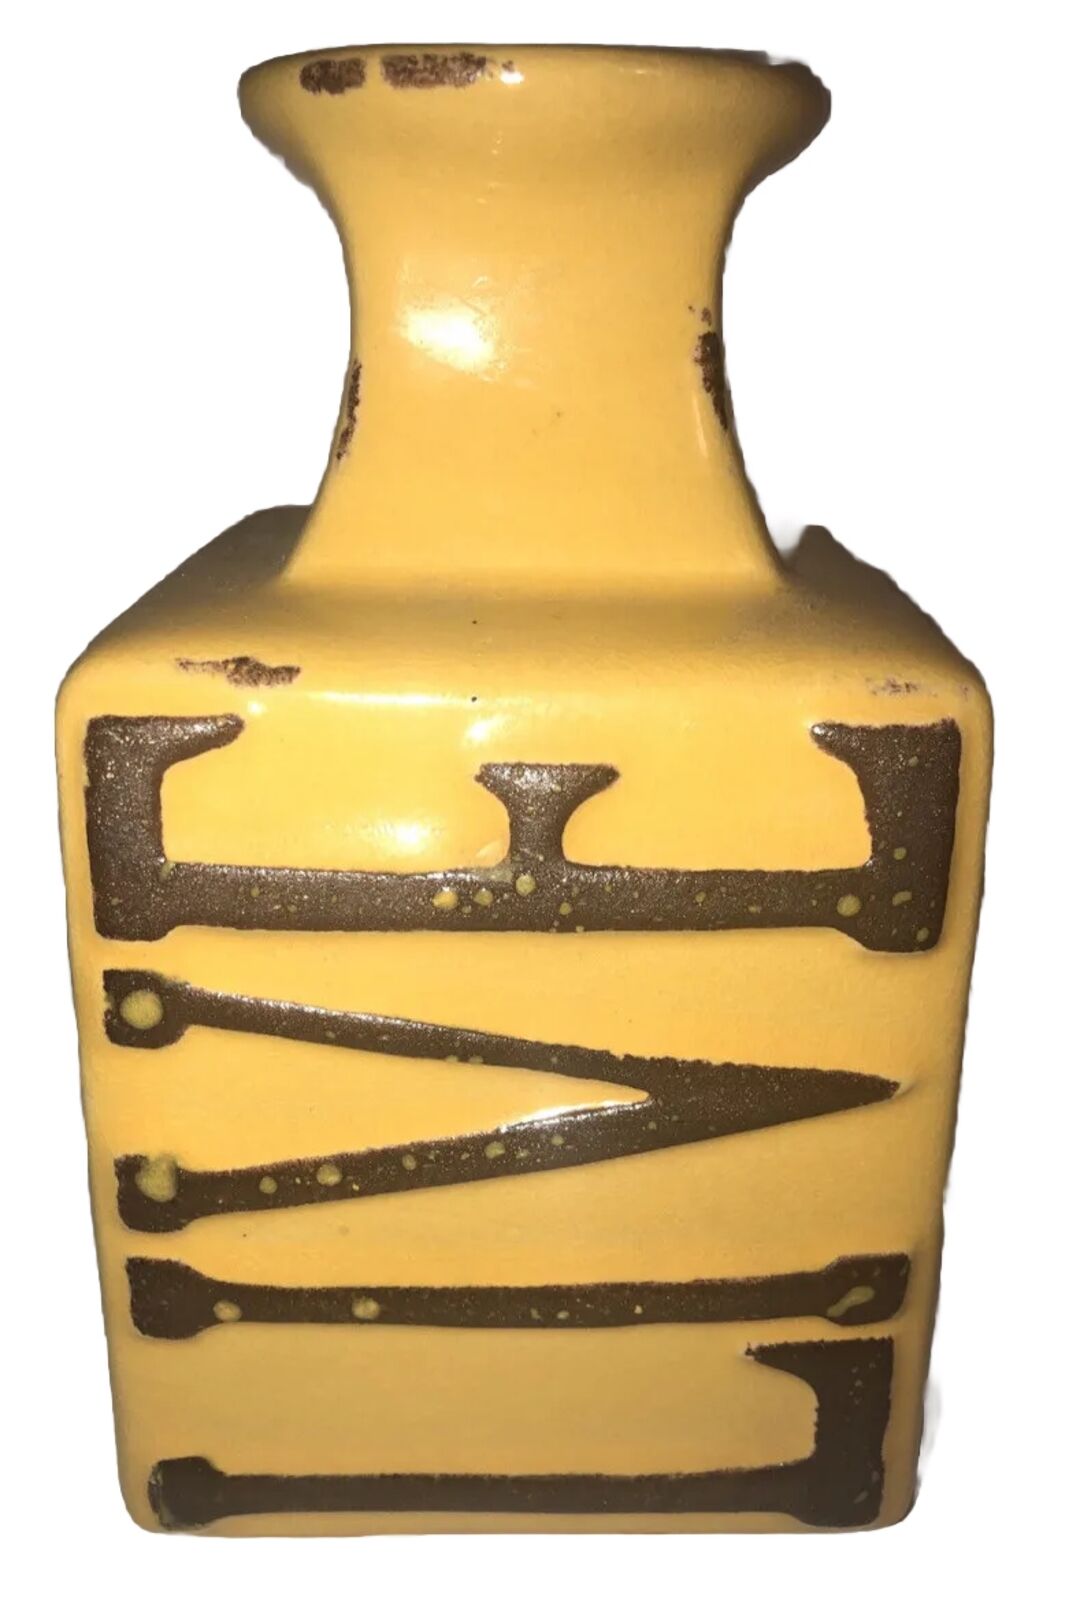 VINTAGE HOSLEY POTTERY MUSTARD Yellow Decorative Vase “Live”